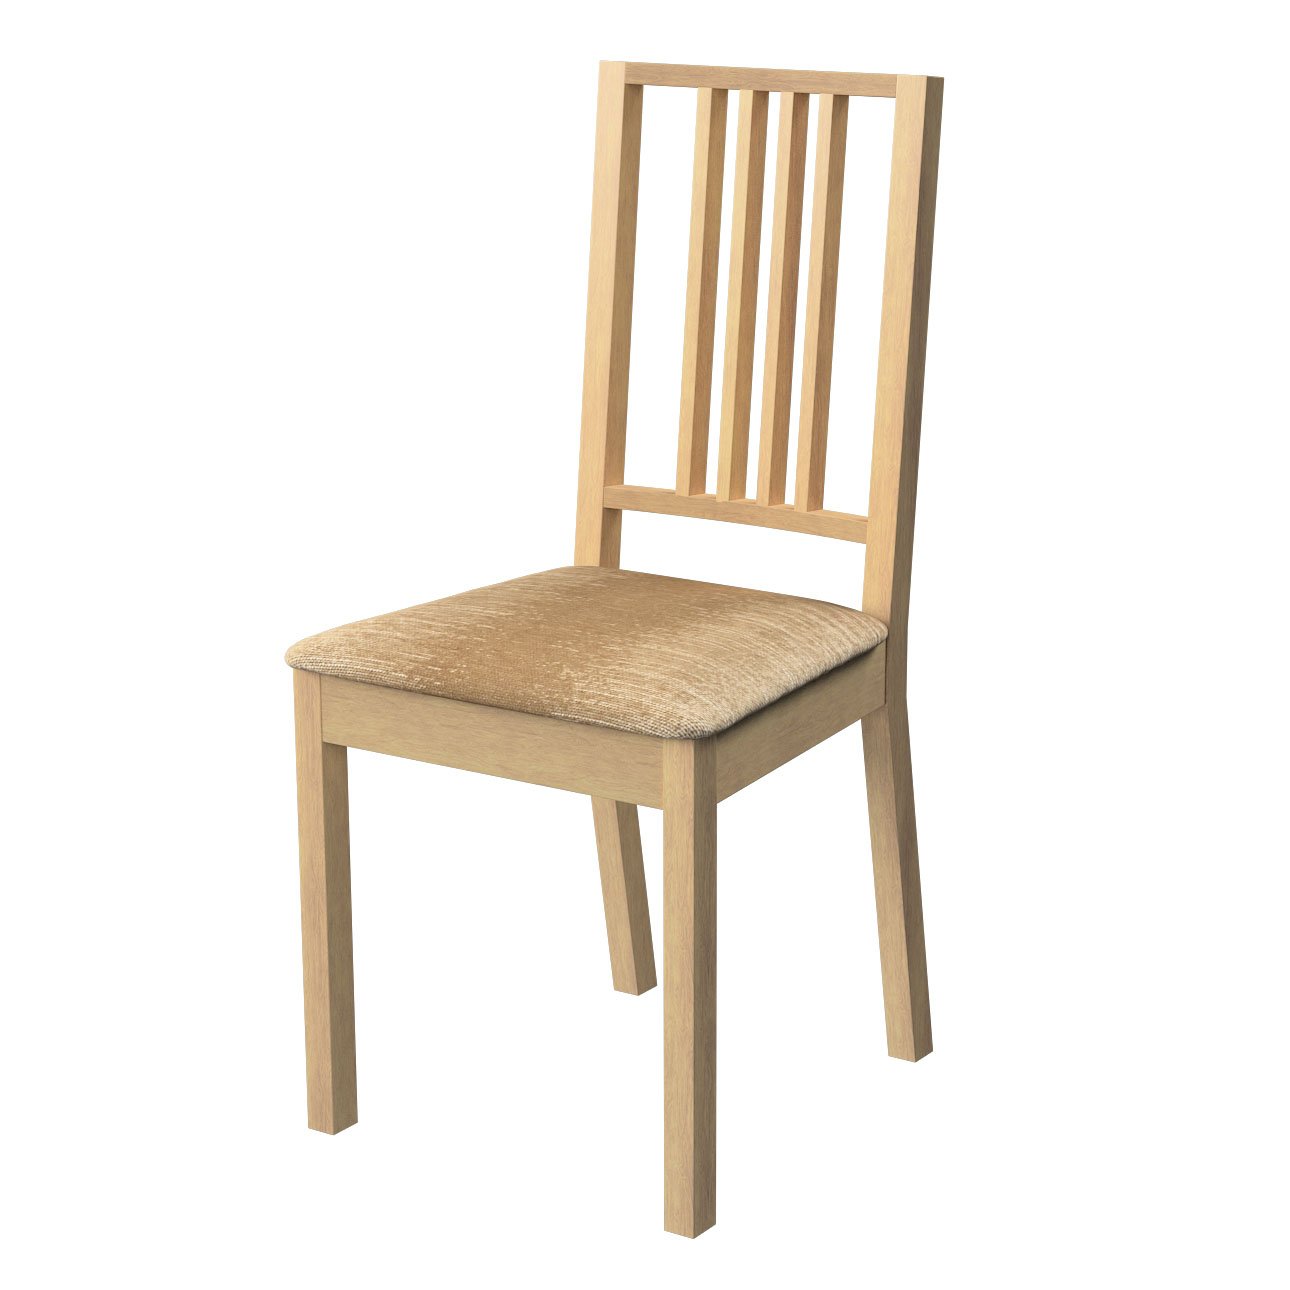 Dekoria Potah na sedák židle Börje, béžová, potah sedák židle Börje, Living, 105-63